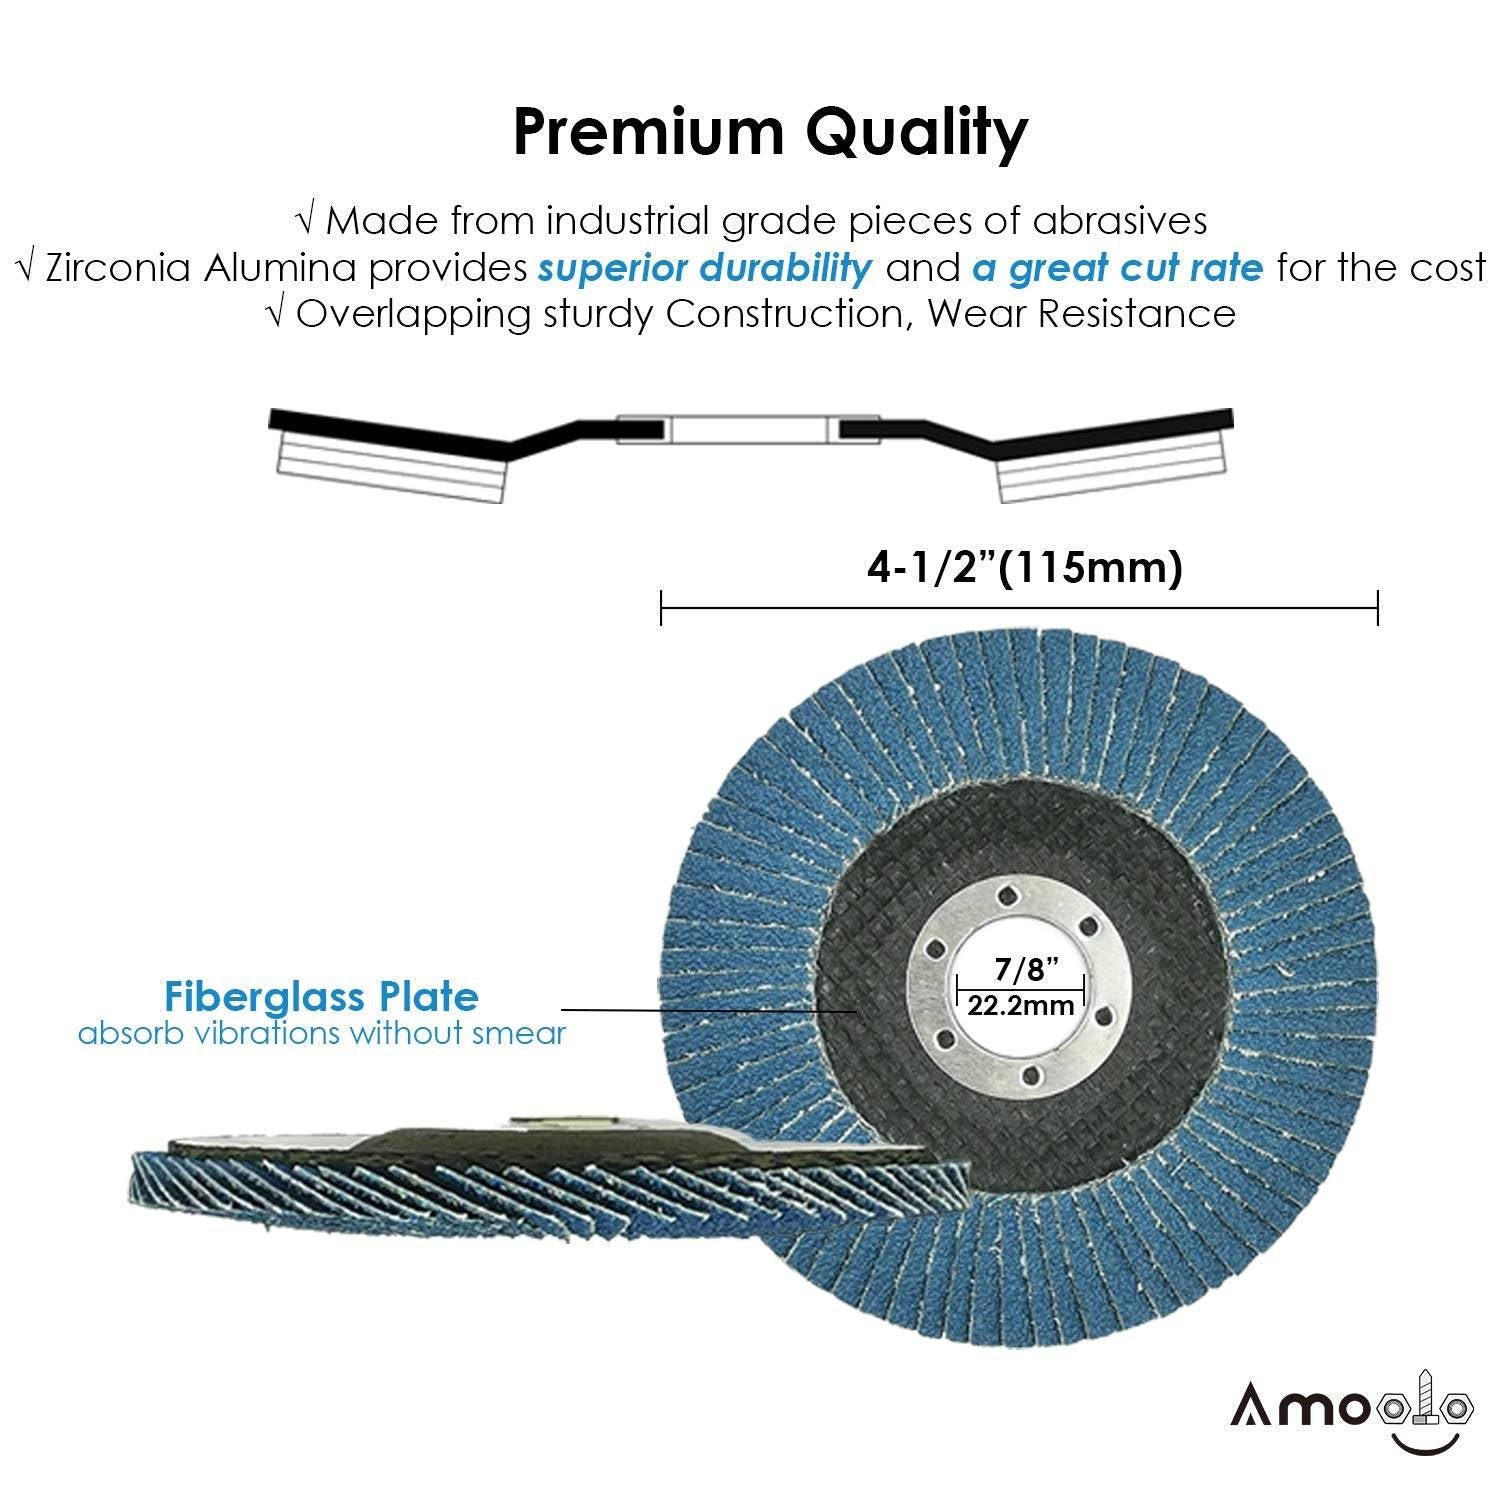 amoolo Zirconia Flap Disc, High Density Abrasive Grinding Discs for Metal/Wood Grinding